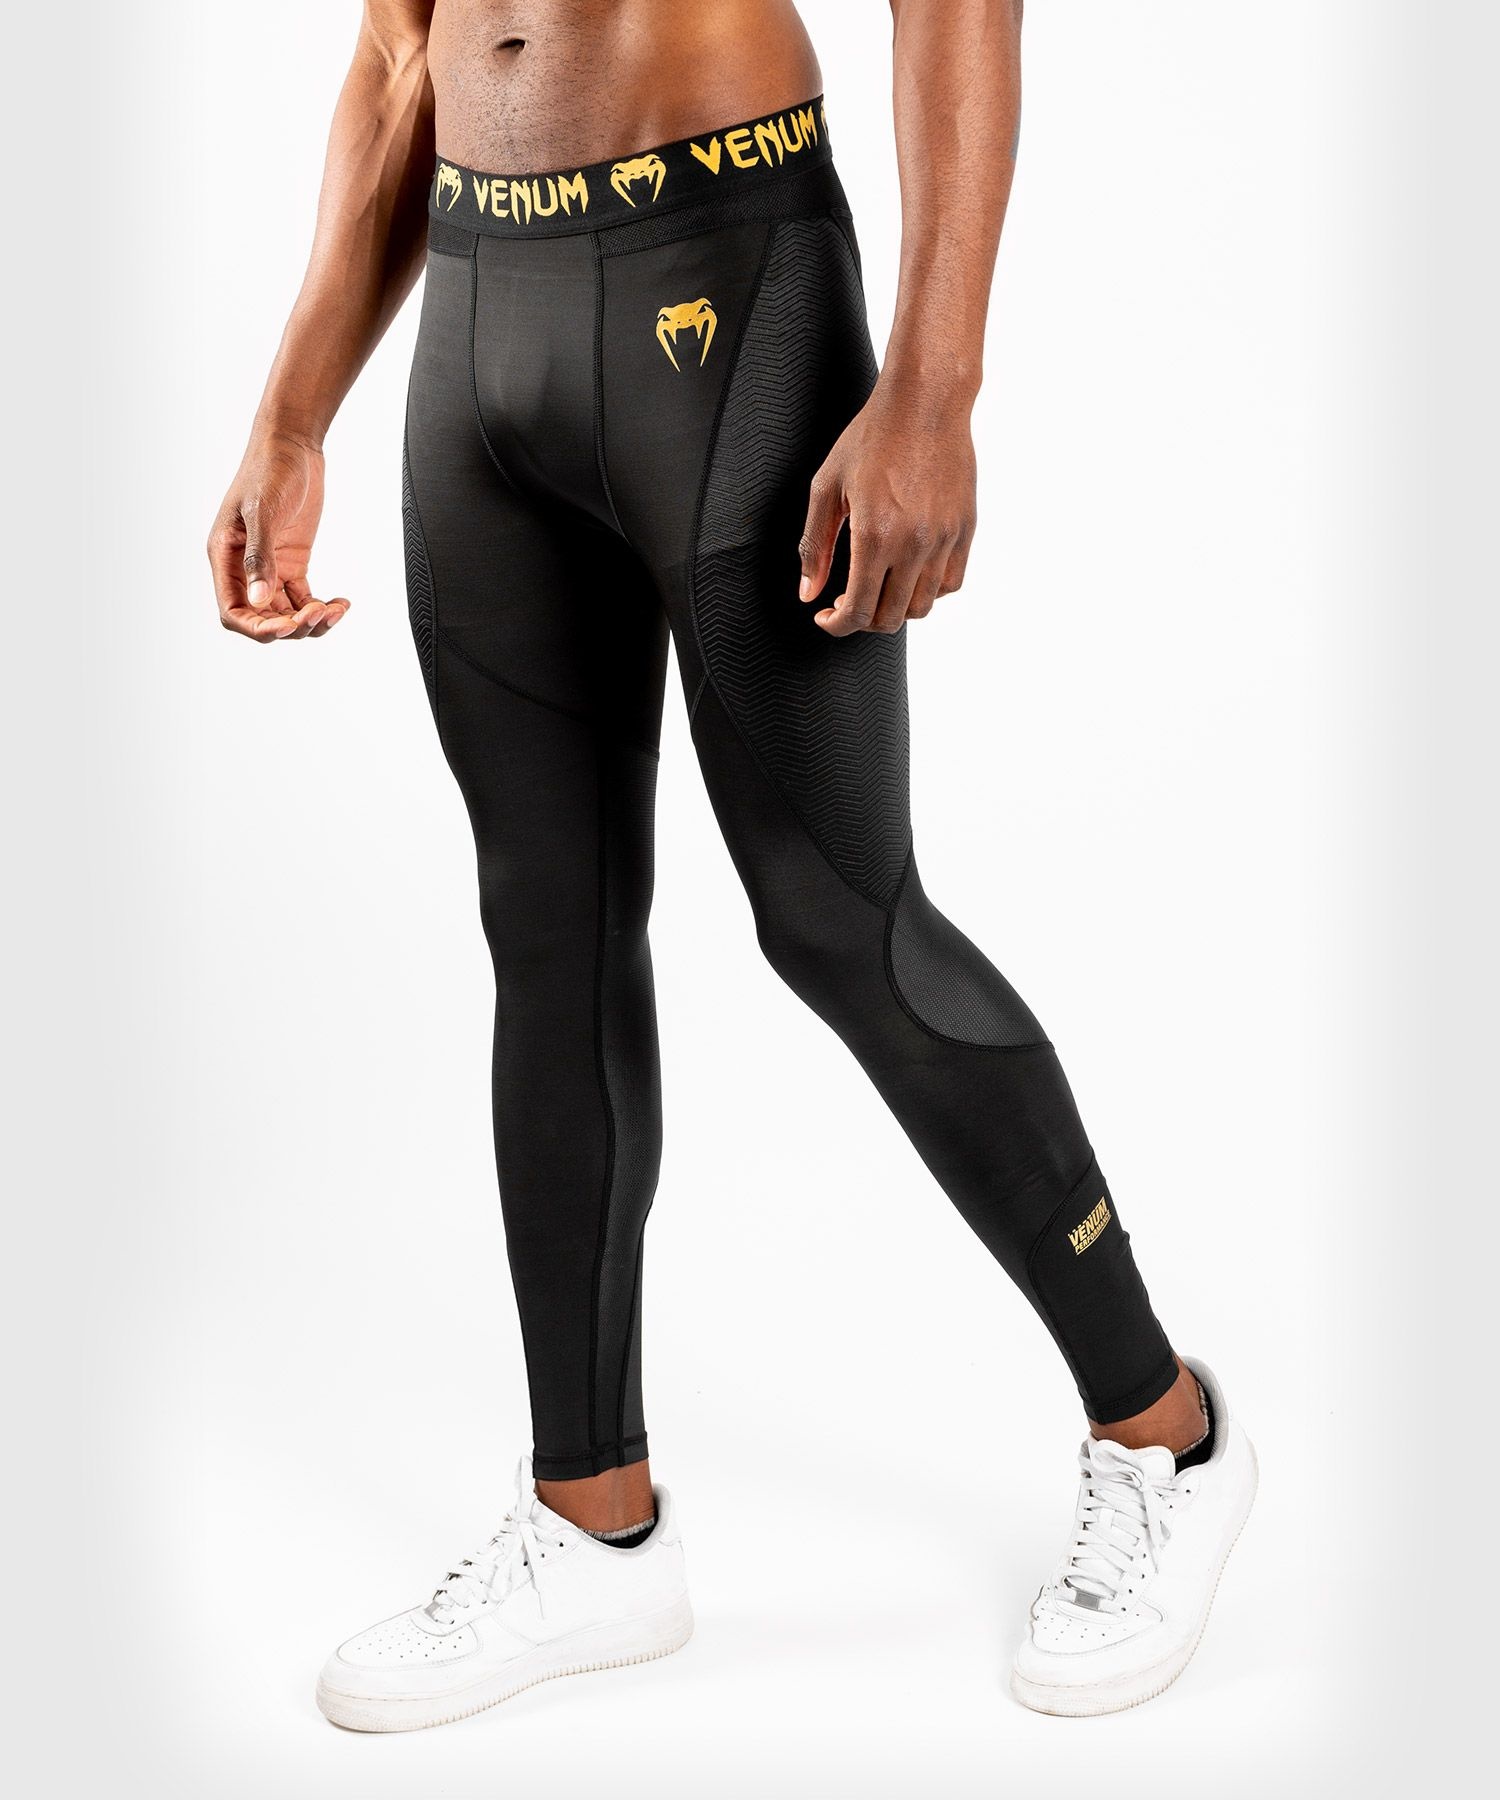 Hydrogen | Second Skin Shorts Womens | Performance Shorts | SportsDirect.com